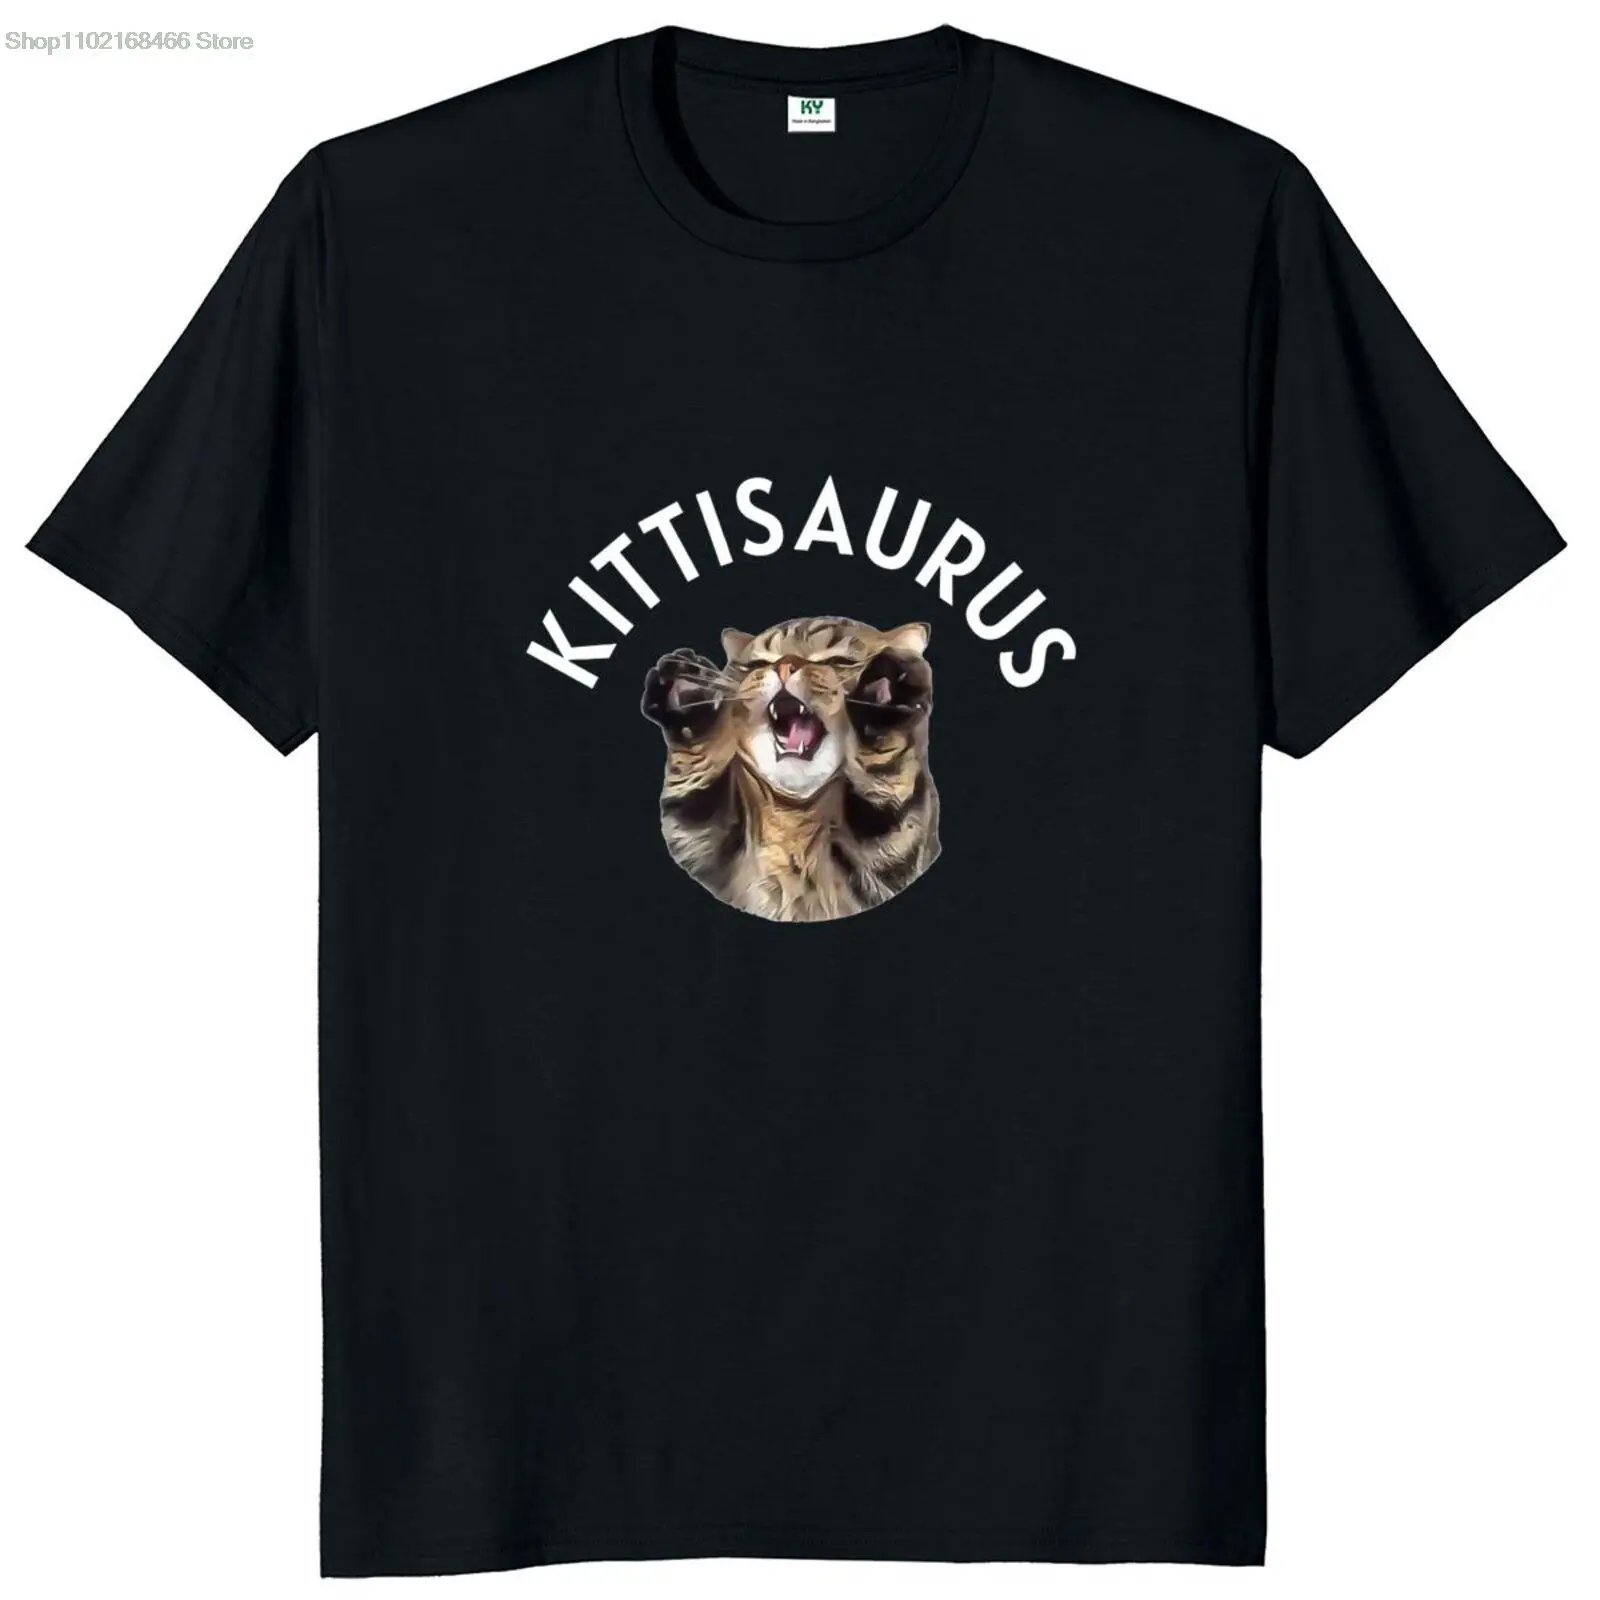 Kittisaurus Cute T Shirt Funny Cat Lovers Classic Tee Tops Korean YouTuber Fans Kawaii Tshirt For Men Women 100% Cotton